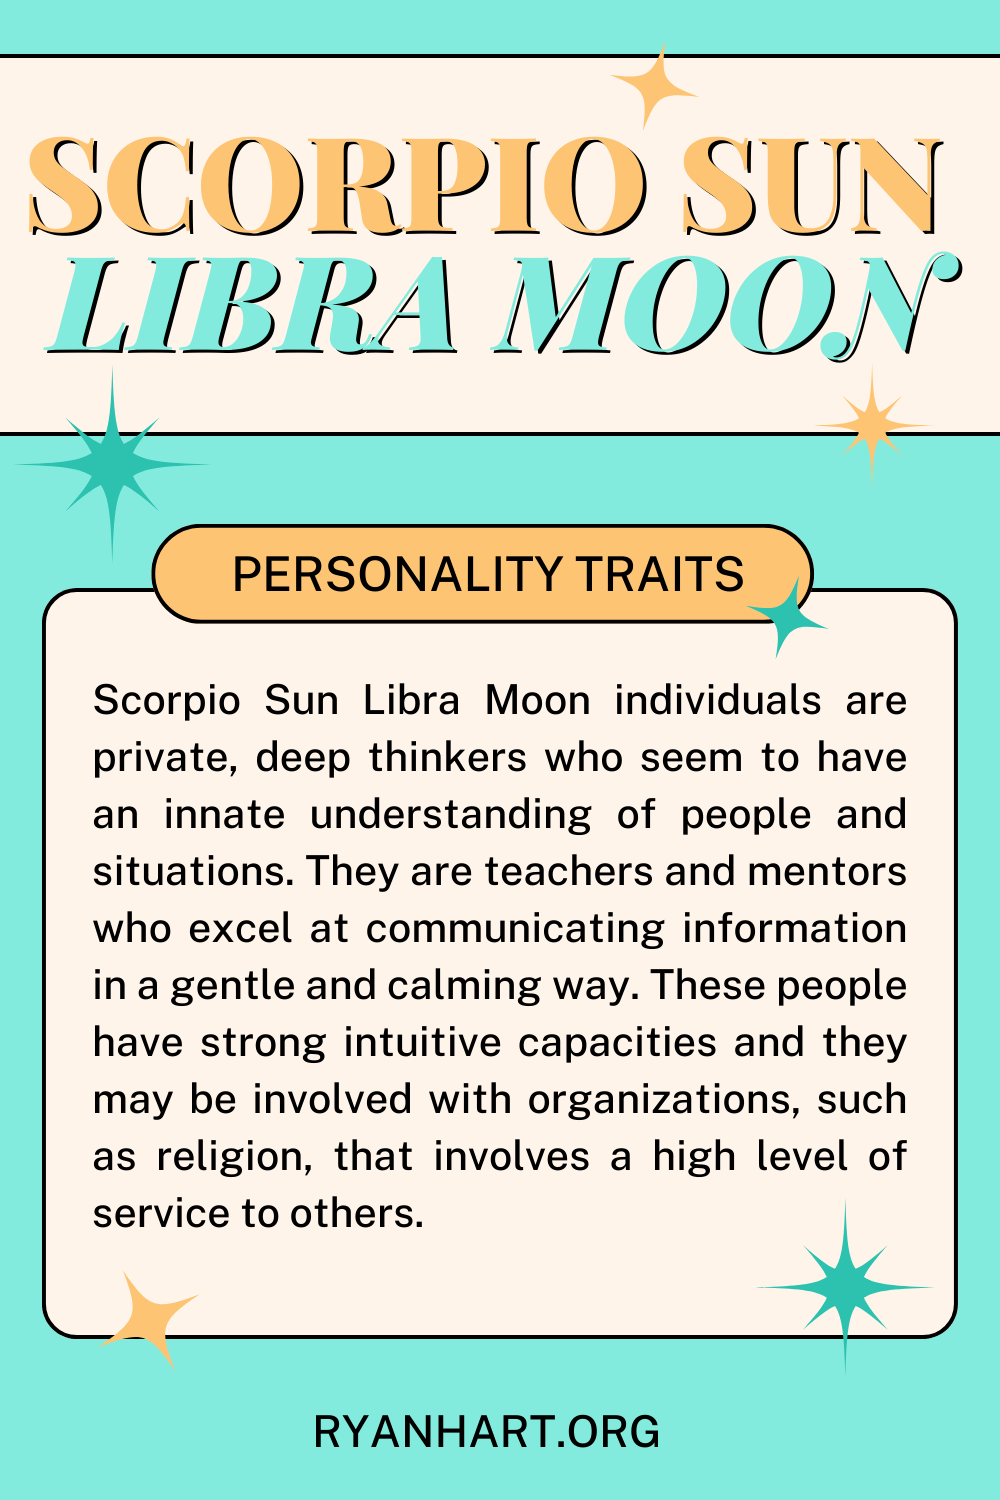 Scorpio Sun Libra Moon Description